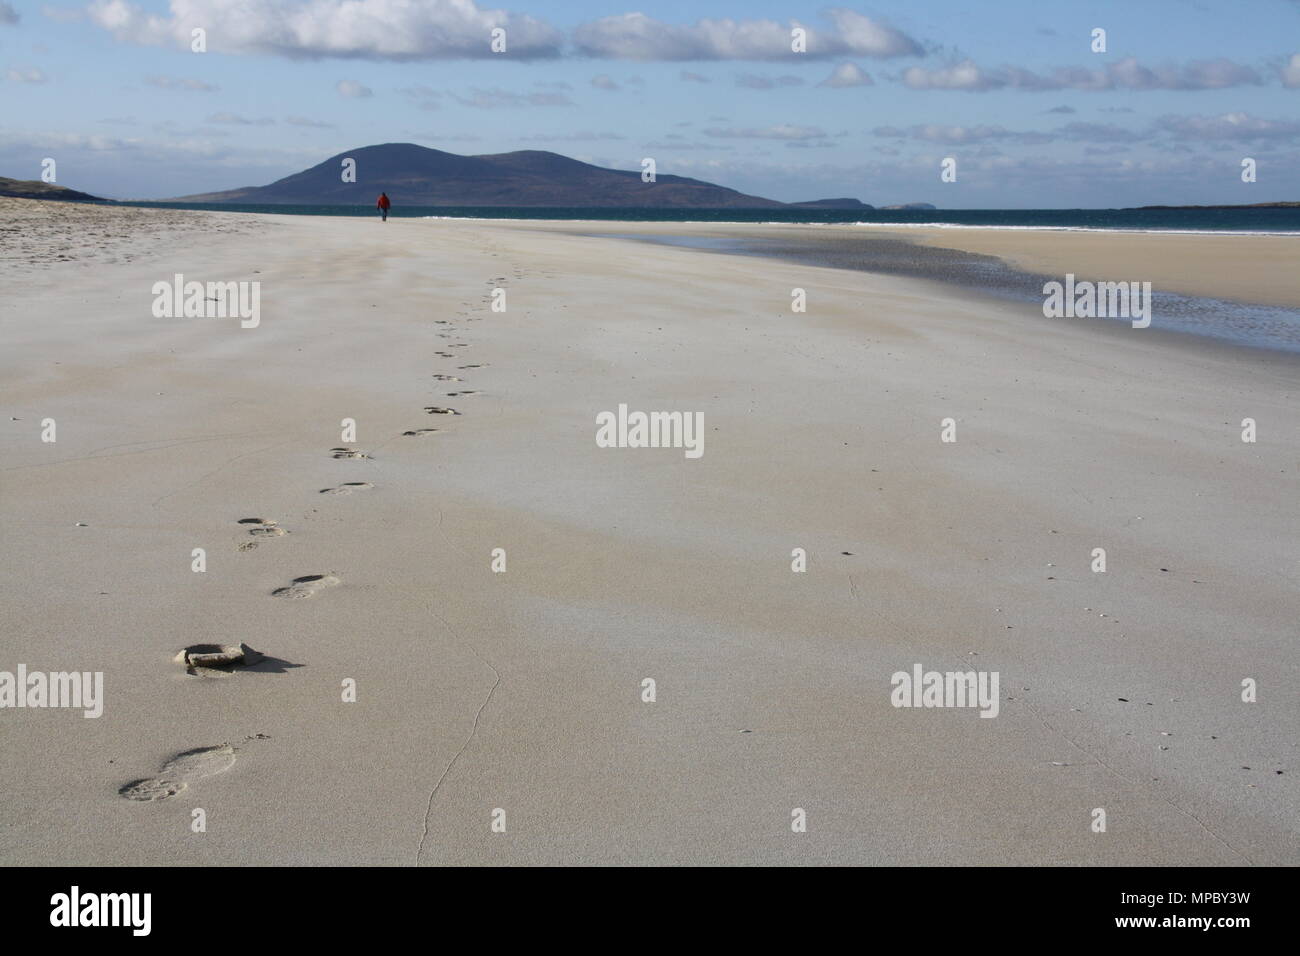 A single track of footprints in the sand on Luskentyre beach, Isle of Harris, Scotland. Stock Photo